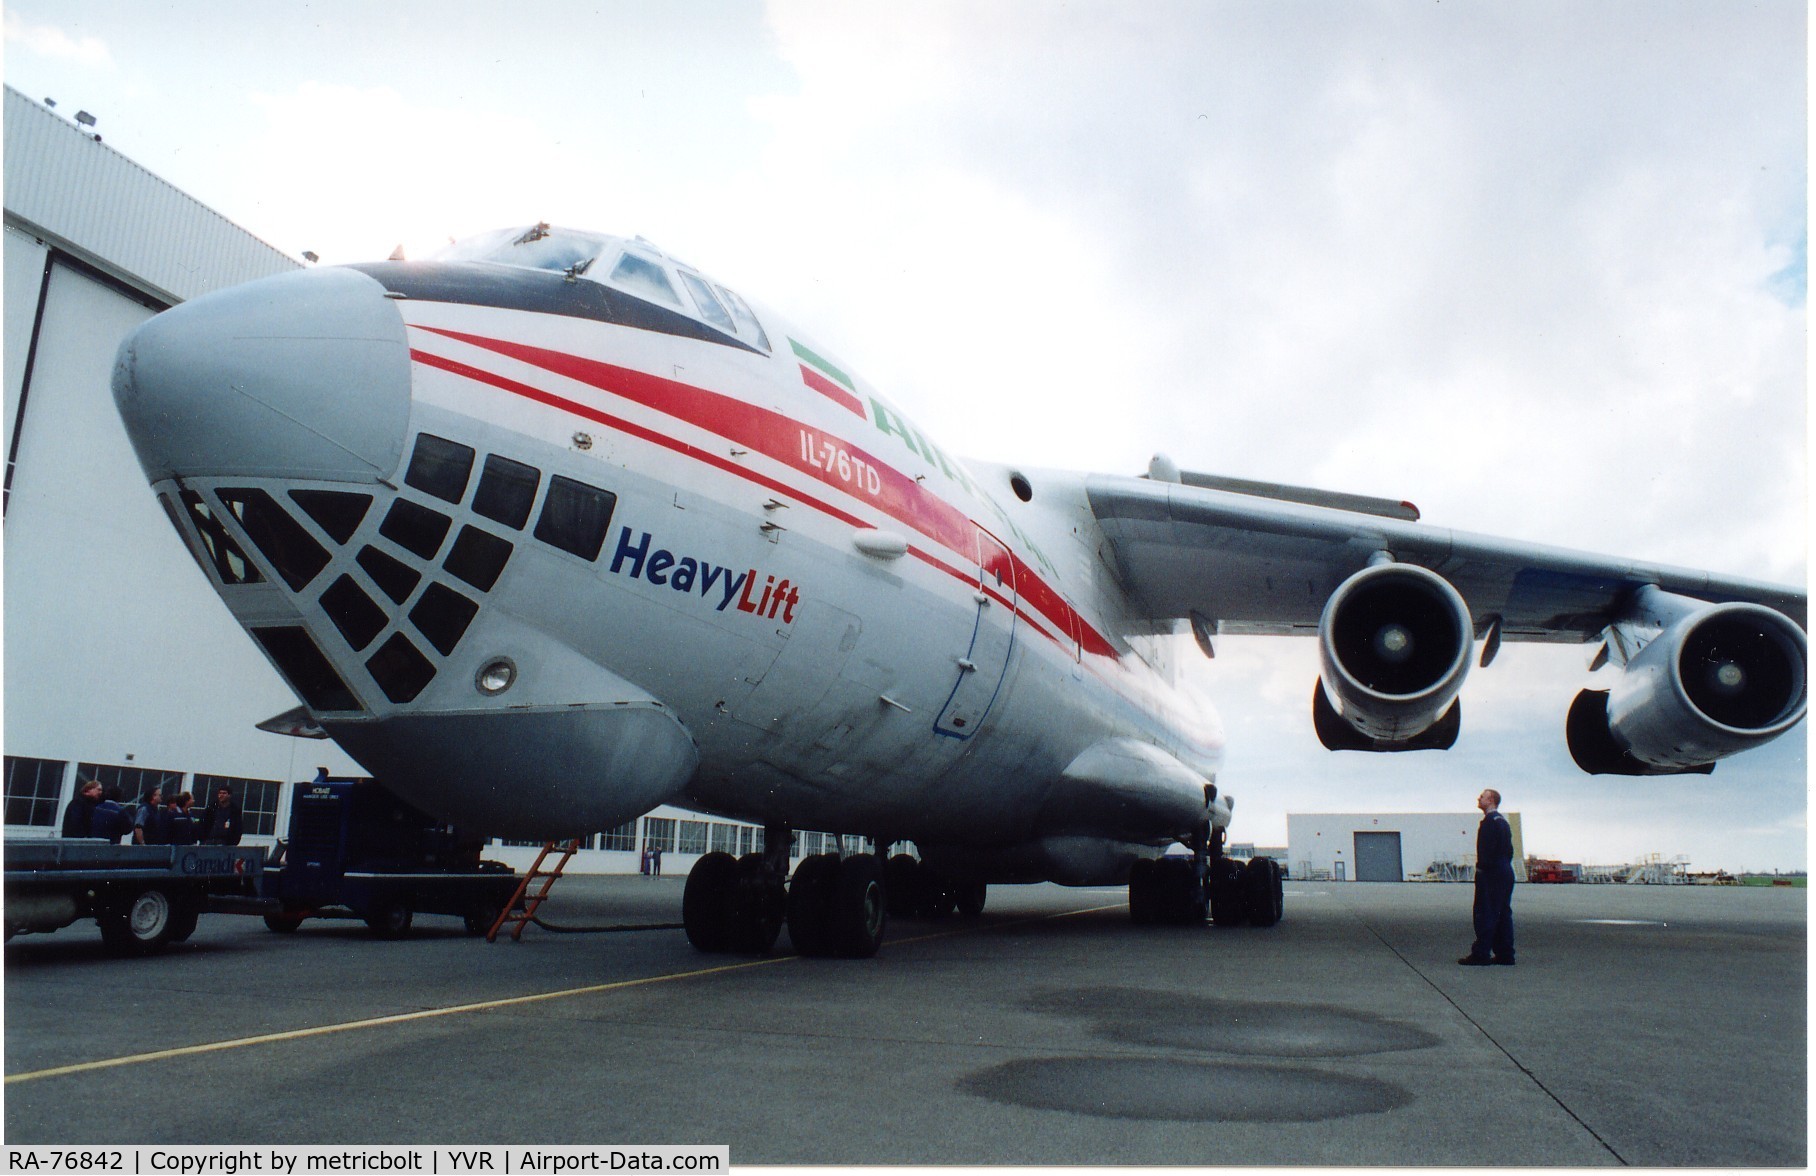 RA-76842, 1994 Ilyushin Il-76TD C/N 1033418616, 24mm lens on 35mm camera exaggerates size of airplane.Mar.2000